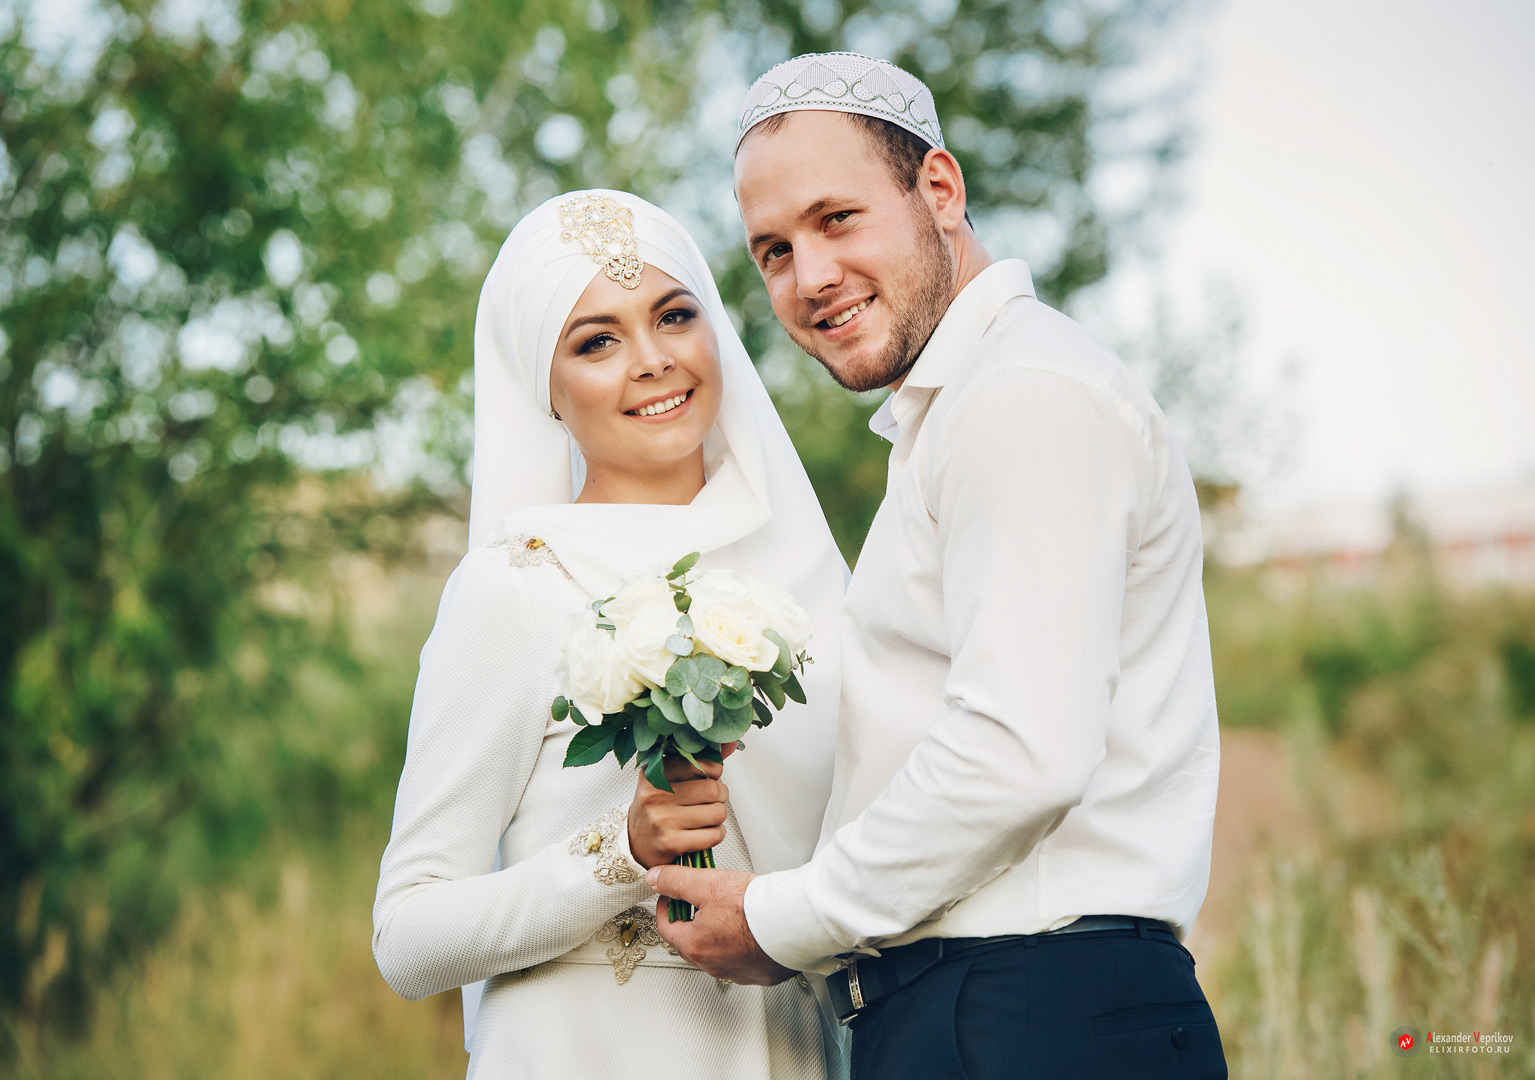 Мусульманская свадьба